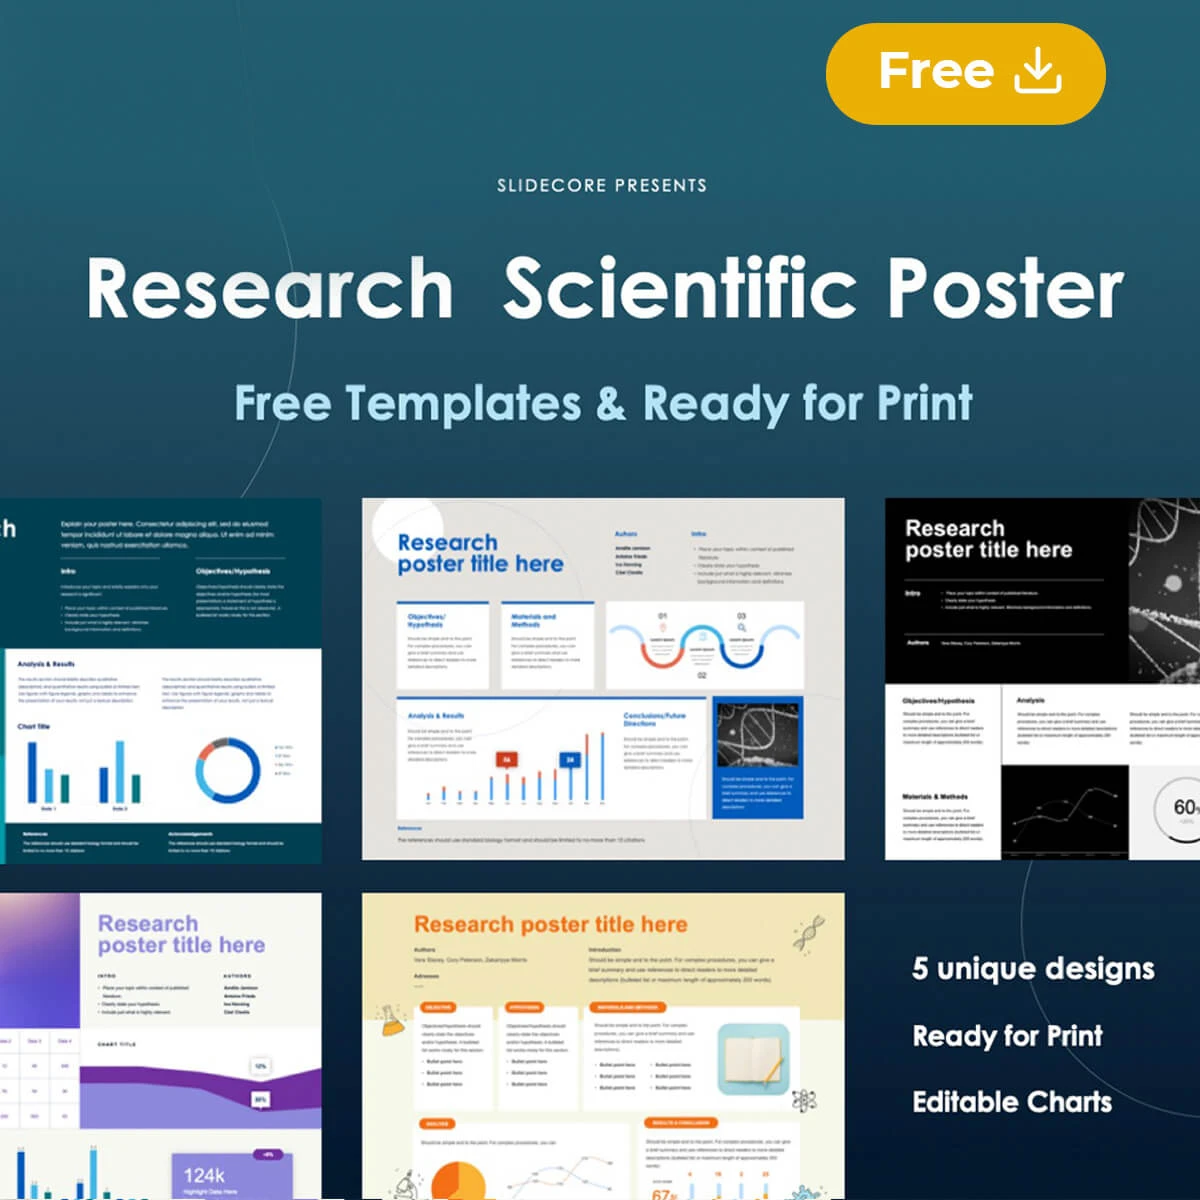 Free Research Scientific Poster